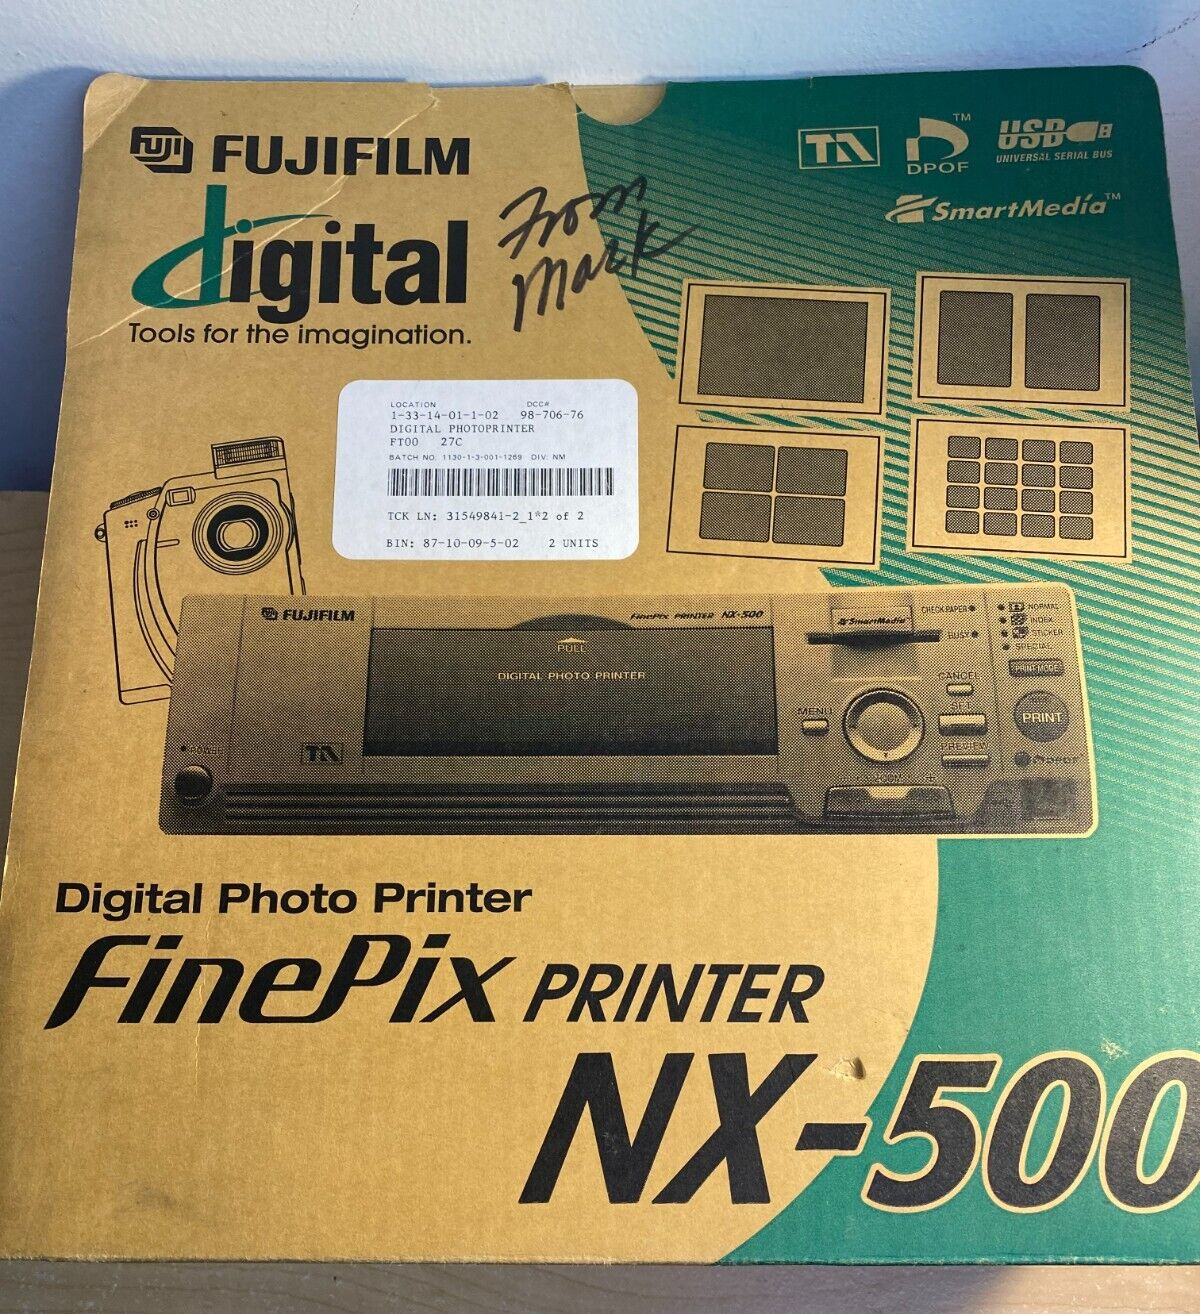 NEW in the Box - Fujifilm Finepix NX-500 Digital Photo Printer